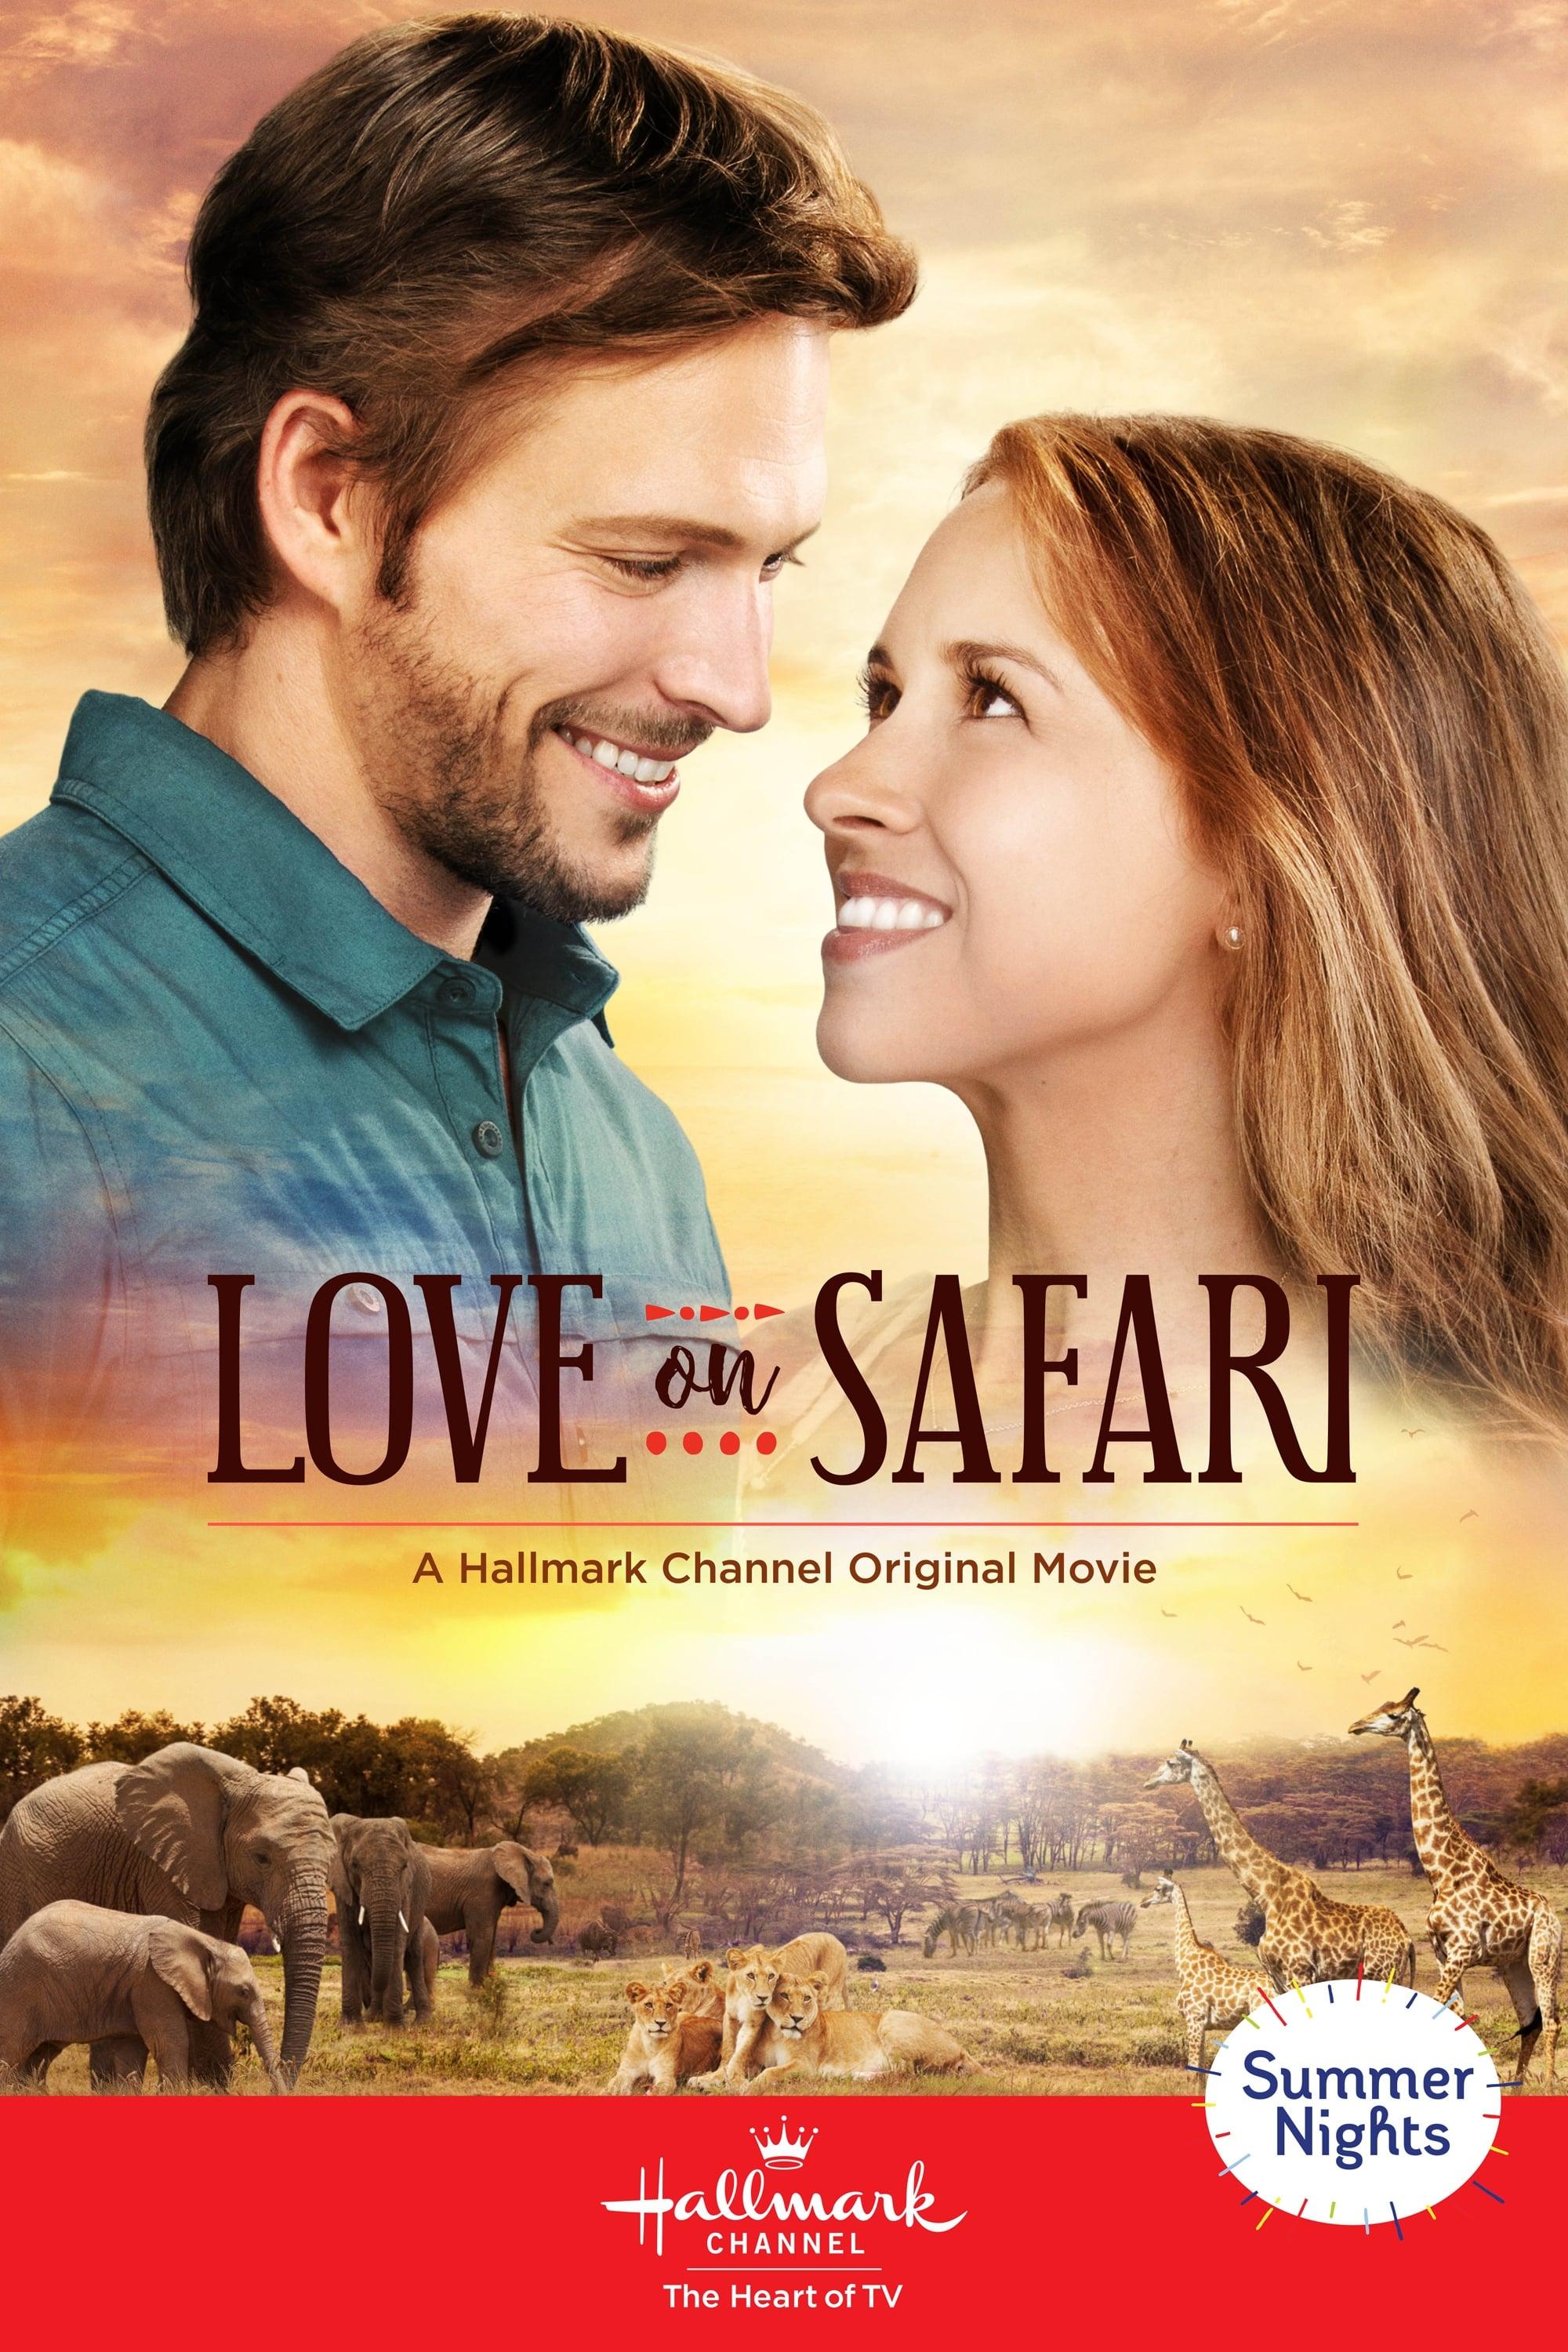 Love on Safari poster